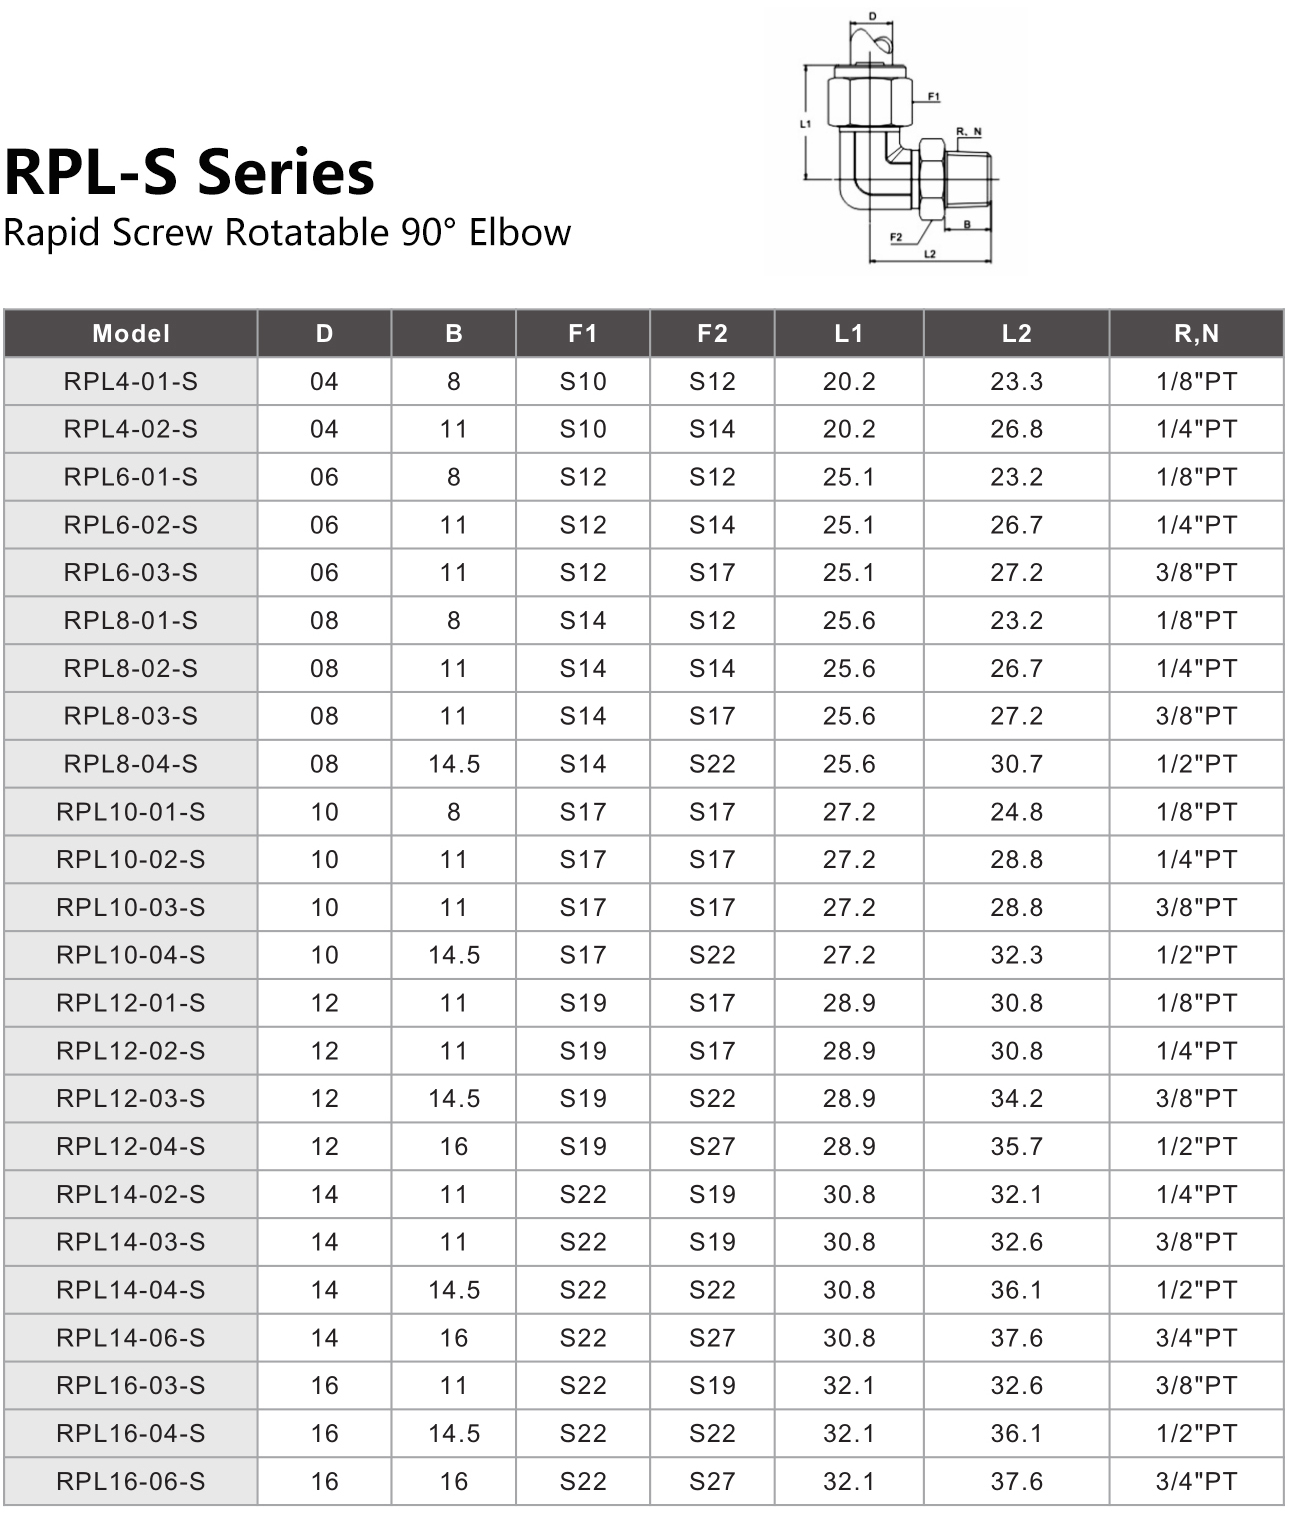 RPL-S Series Rapid Screw Rotatable 90° Elbow